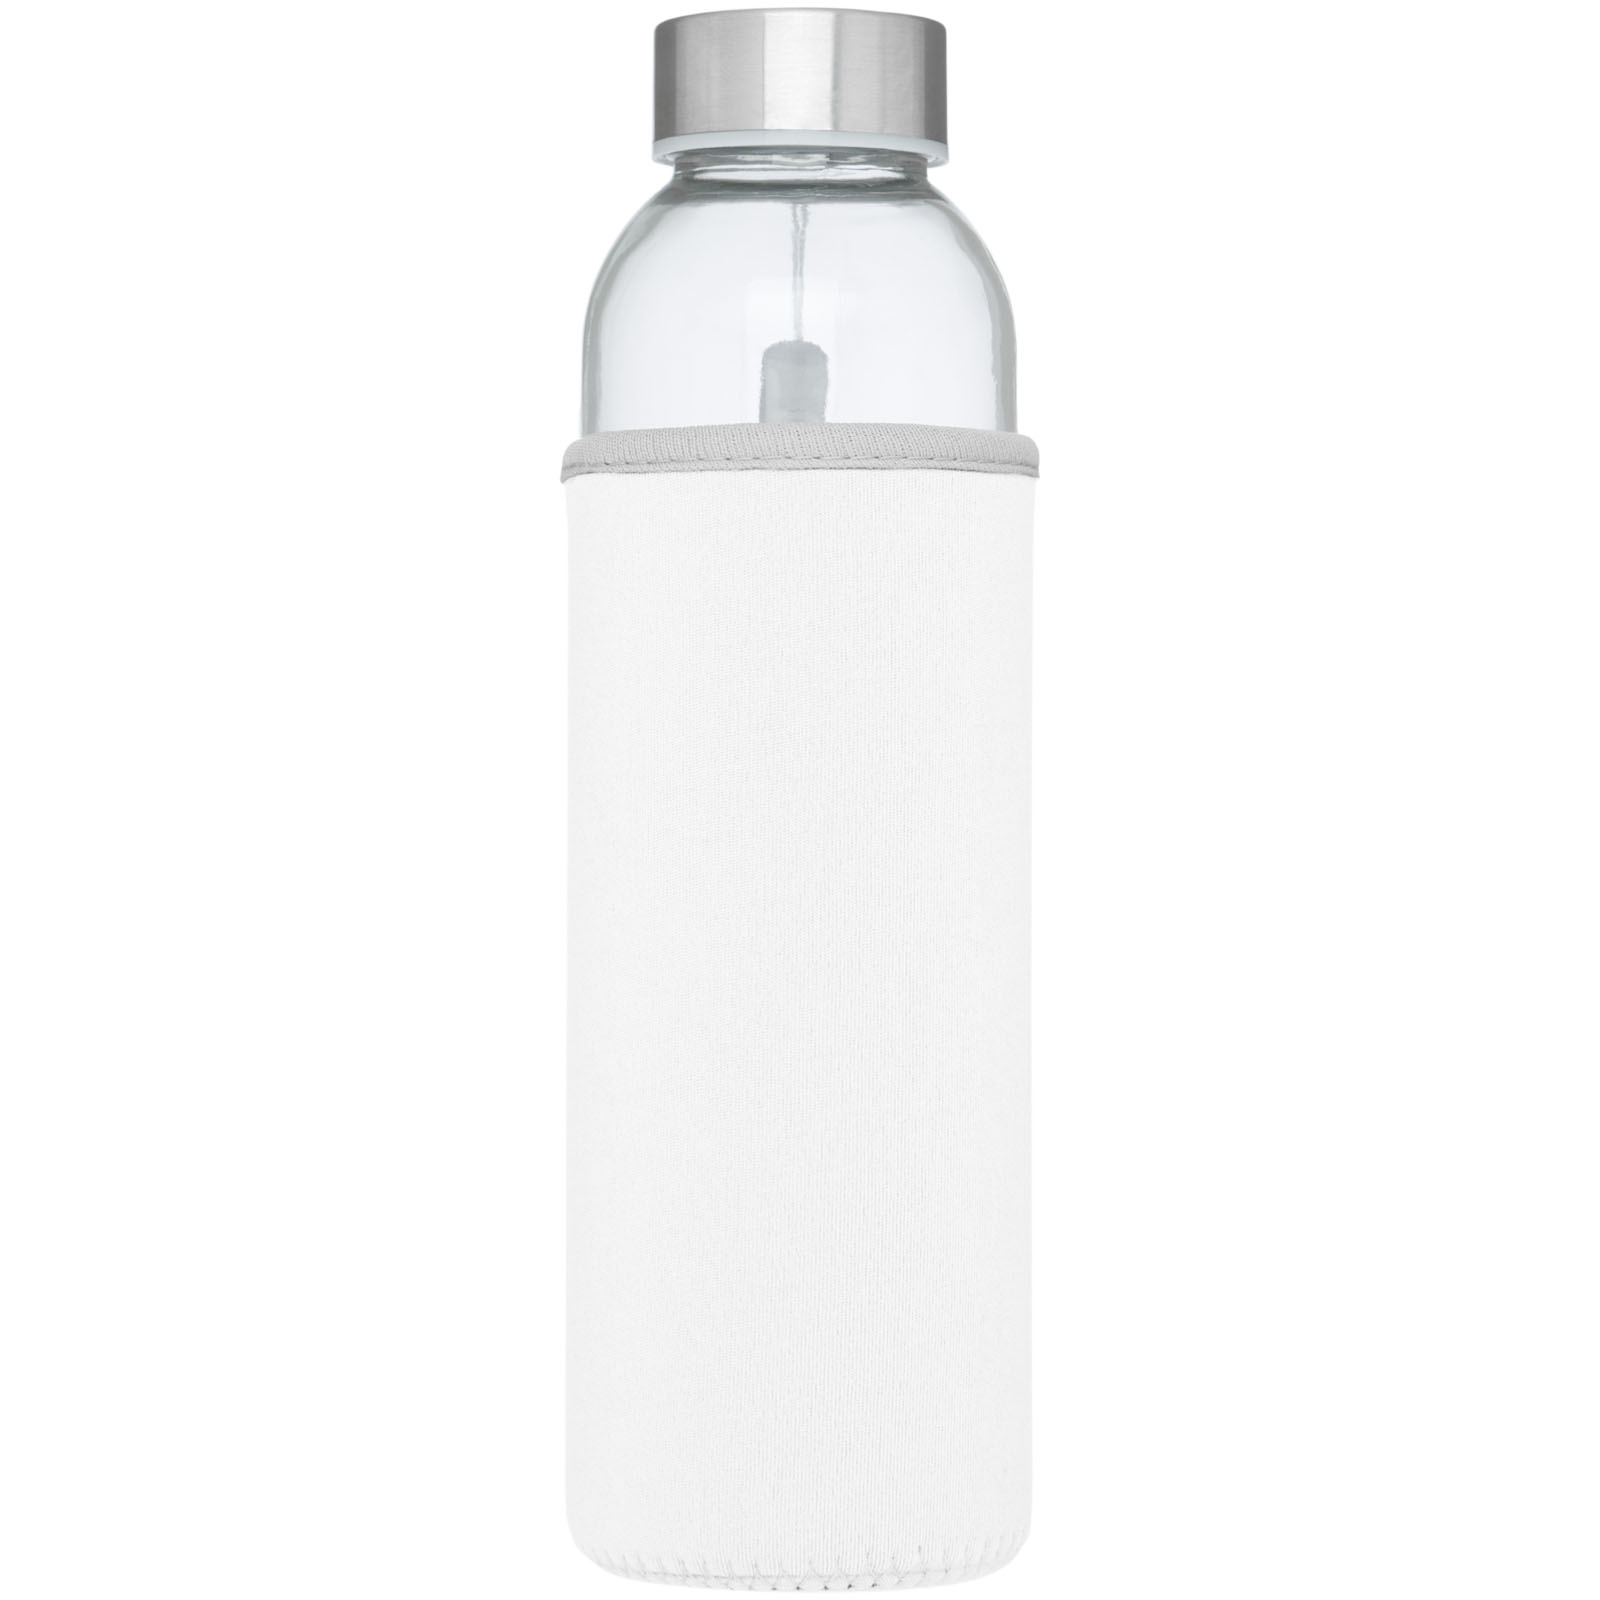 Advertising Water bottles - Bodhi 500 ml glass water bottle - 1